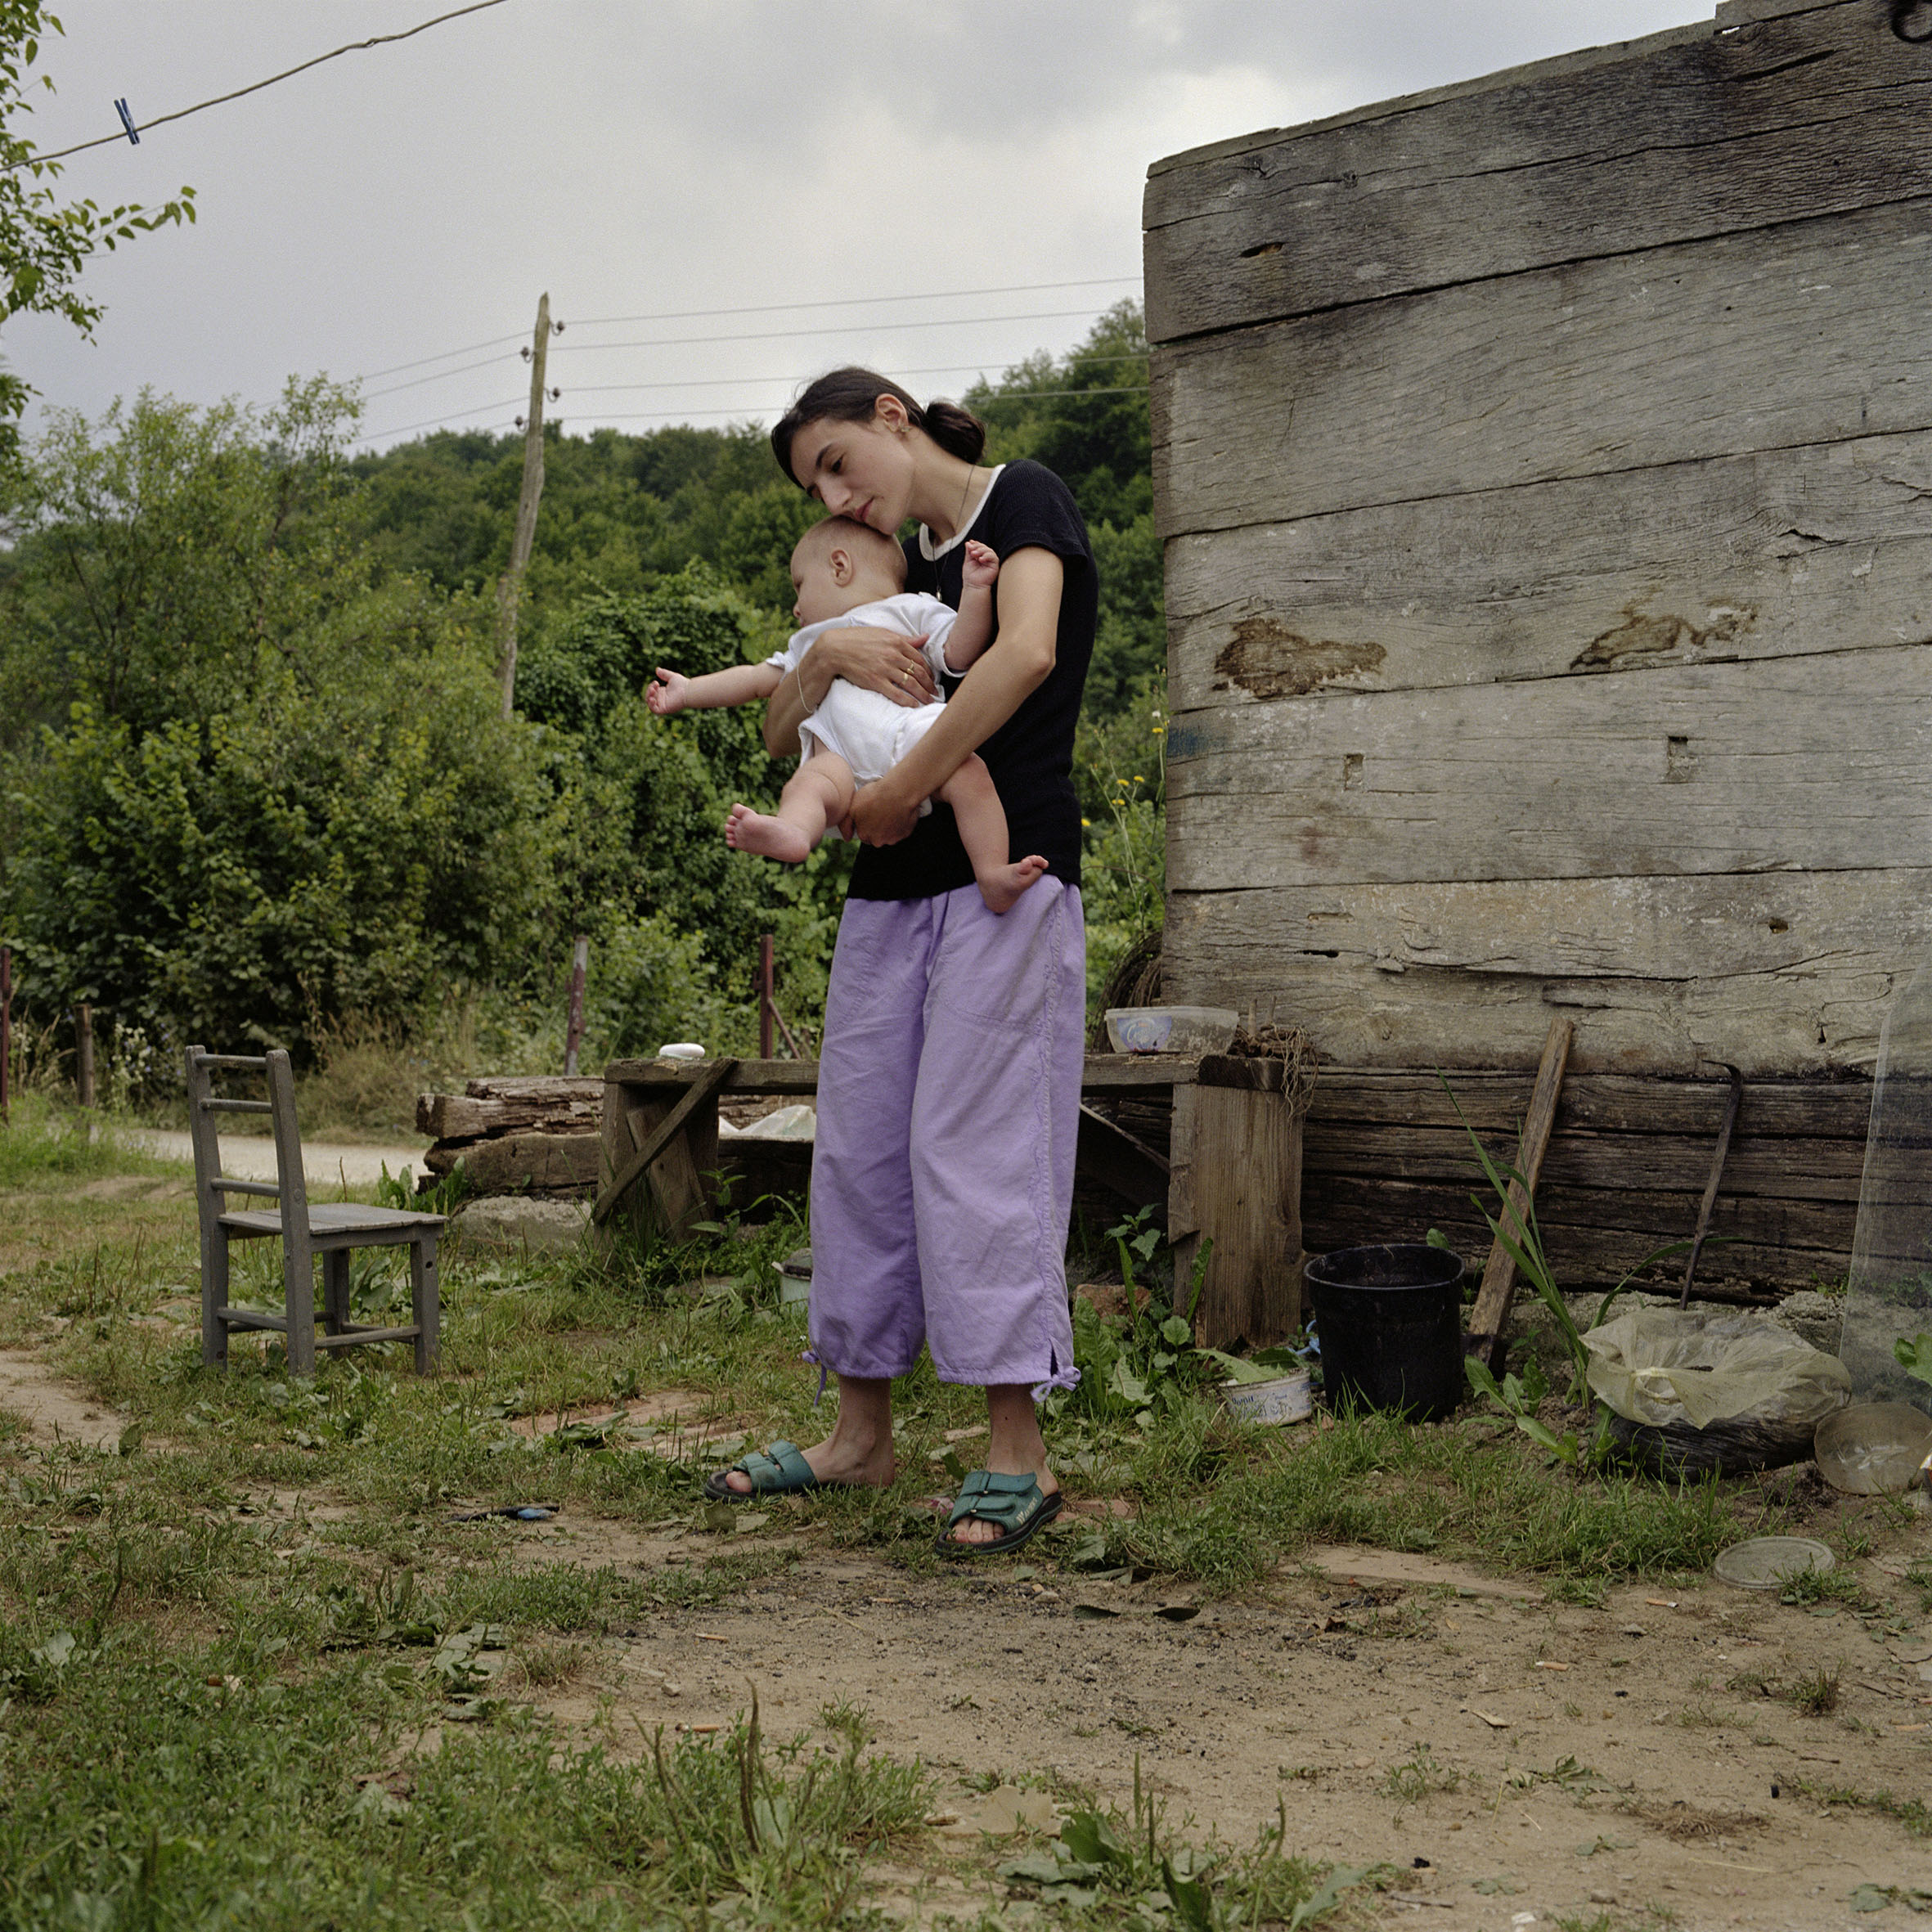  Slavica with baby Nikola outside their small cottage in Jurga, Croatia.     